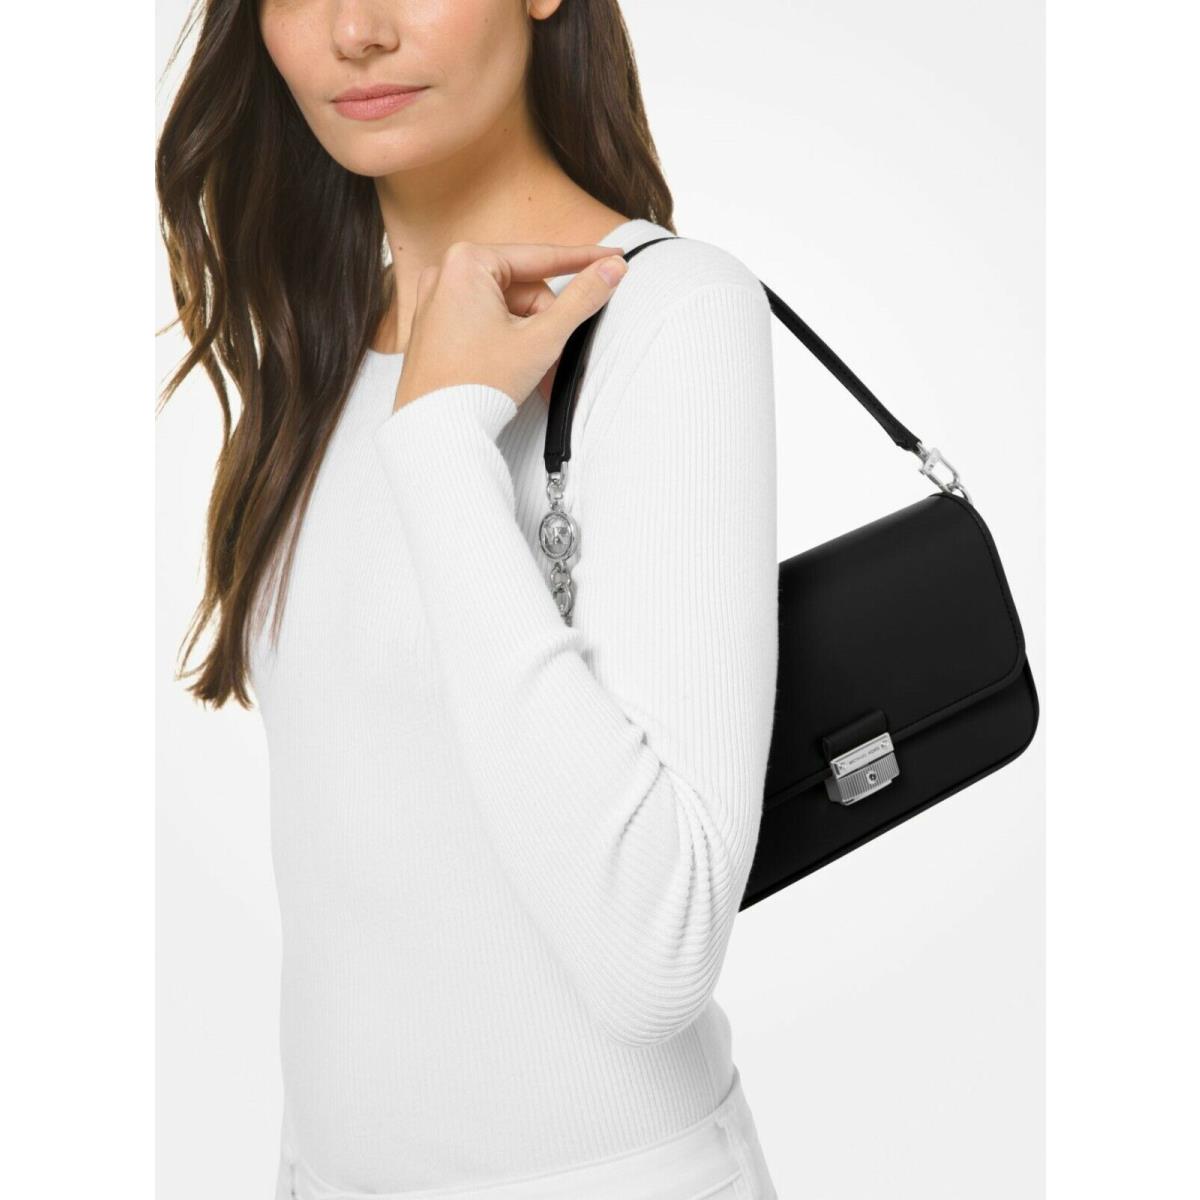 Michael Kors  bag  Bradshaw - Black , 1 Black Hand strap + 1 Black Crossbody/Shoulder Handle/Strap, Silver Hardware 5